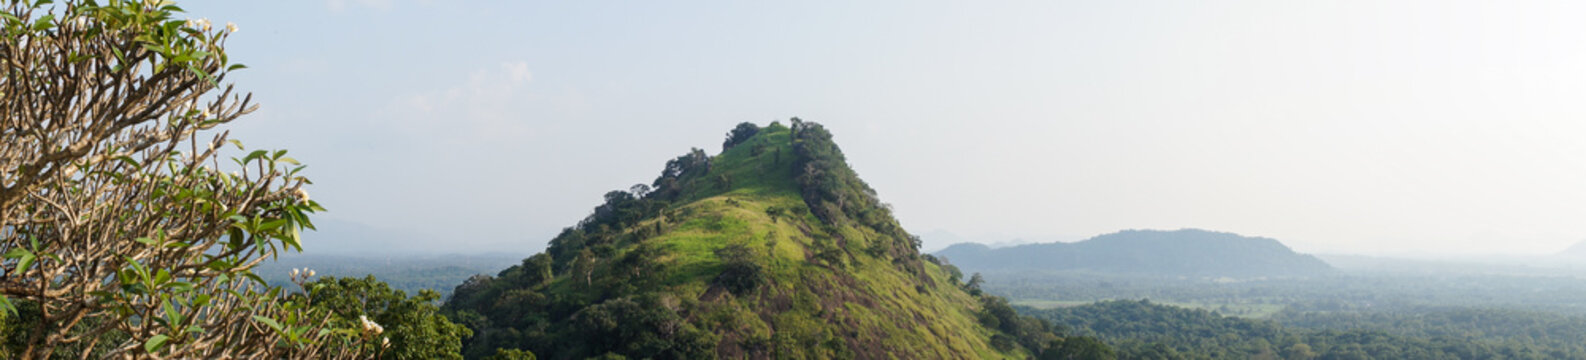 View on mountain from Damubulla cave temple, Sri Lanka